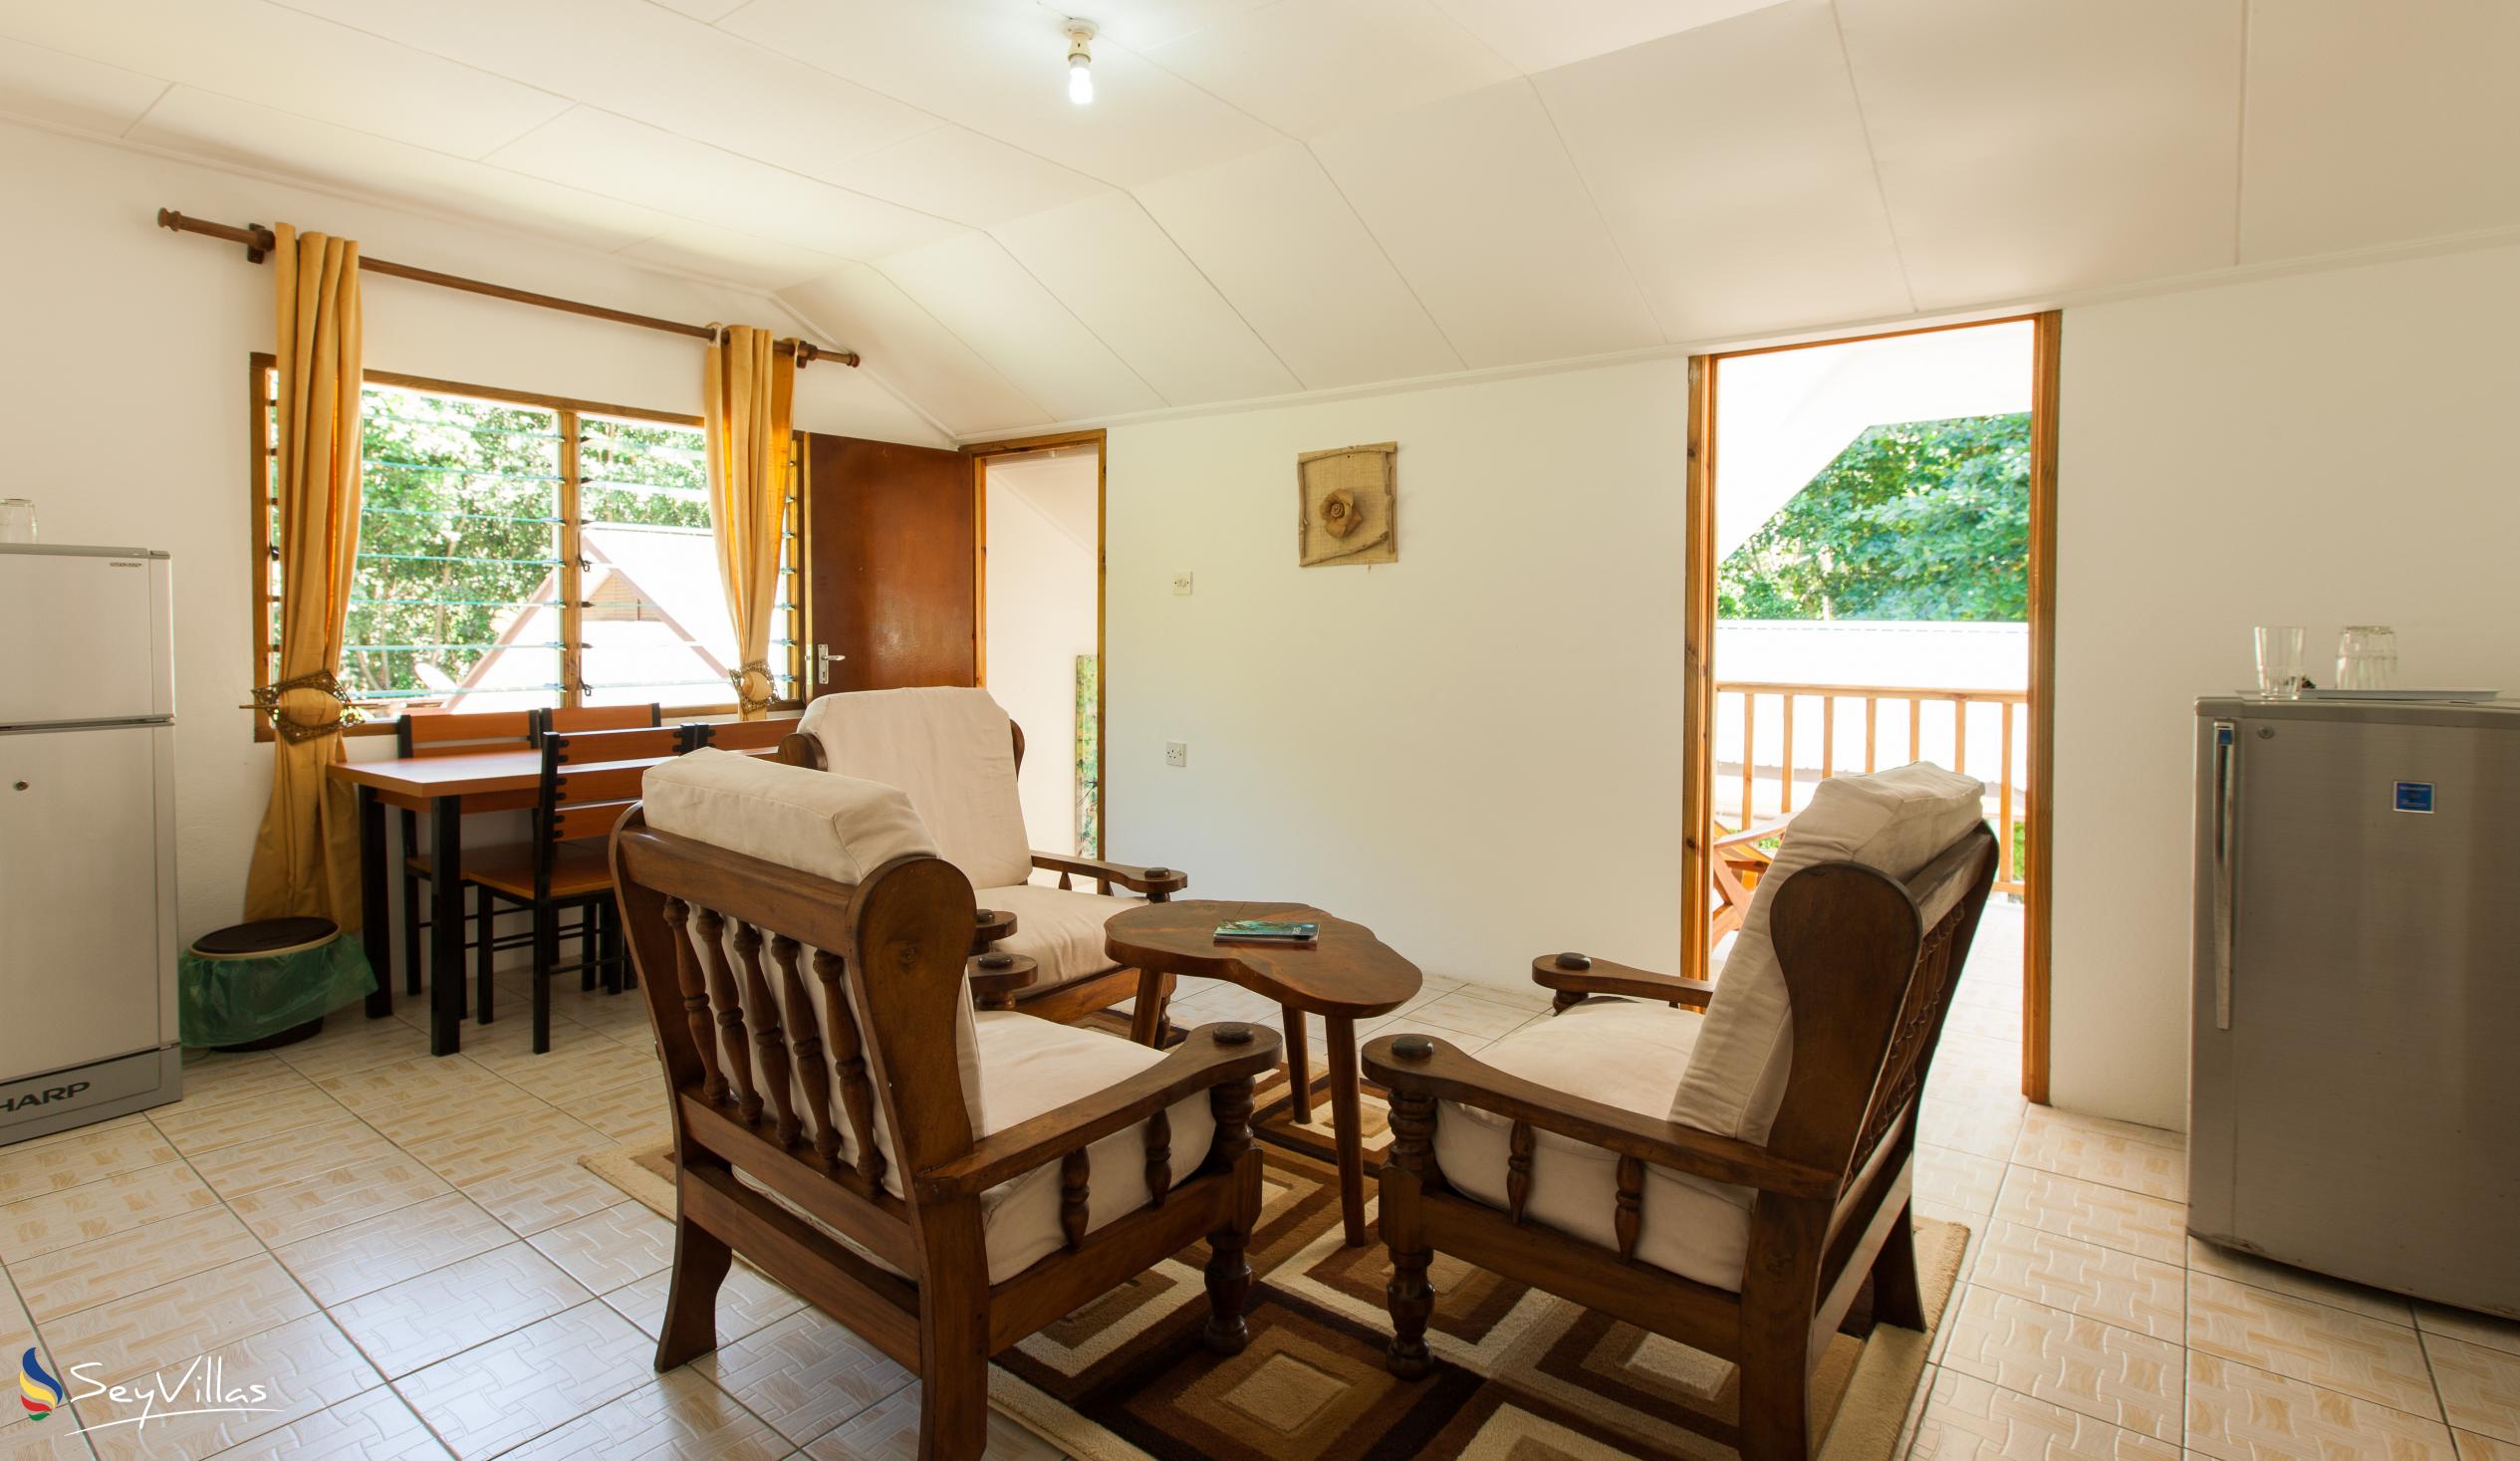 Foto 45: Tannette's Villa - Innenbereich - La Digue (Seychellen)